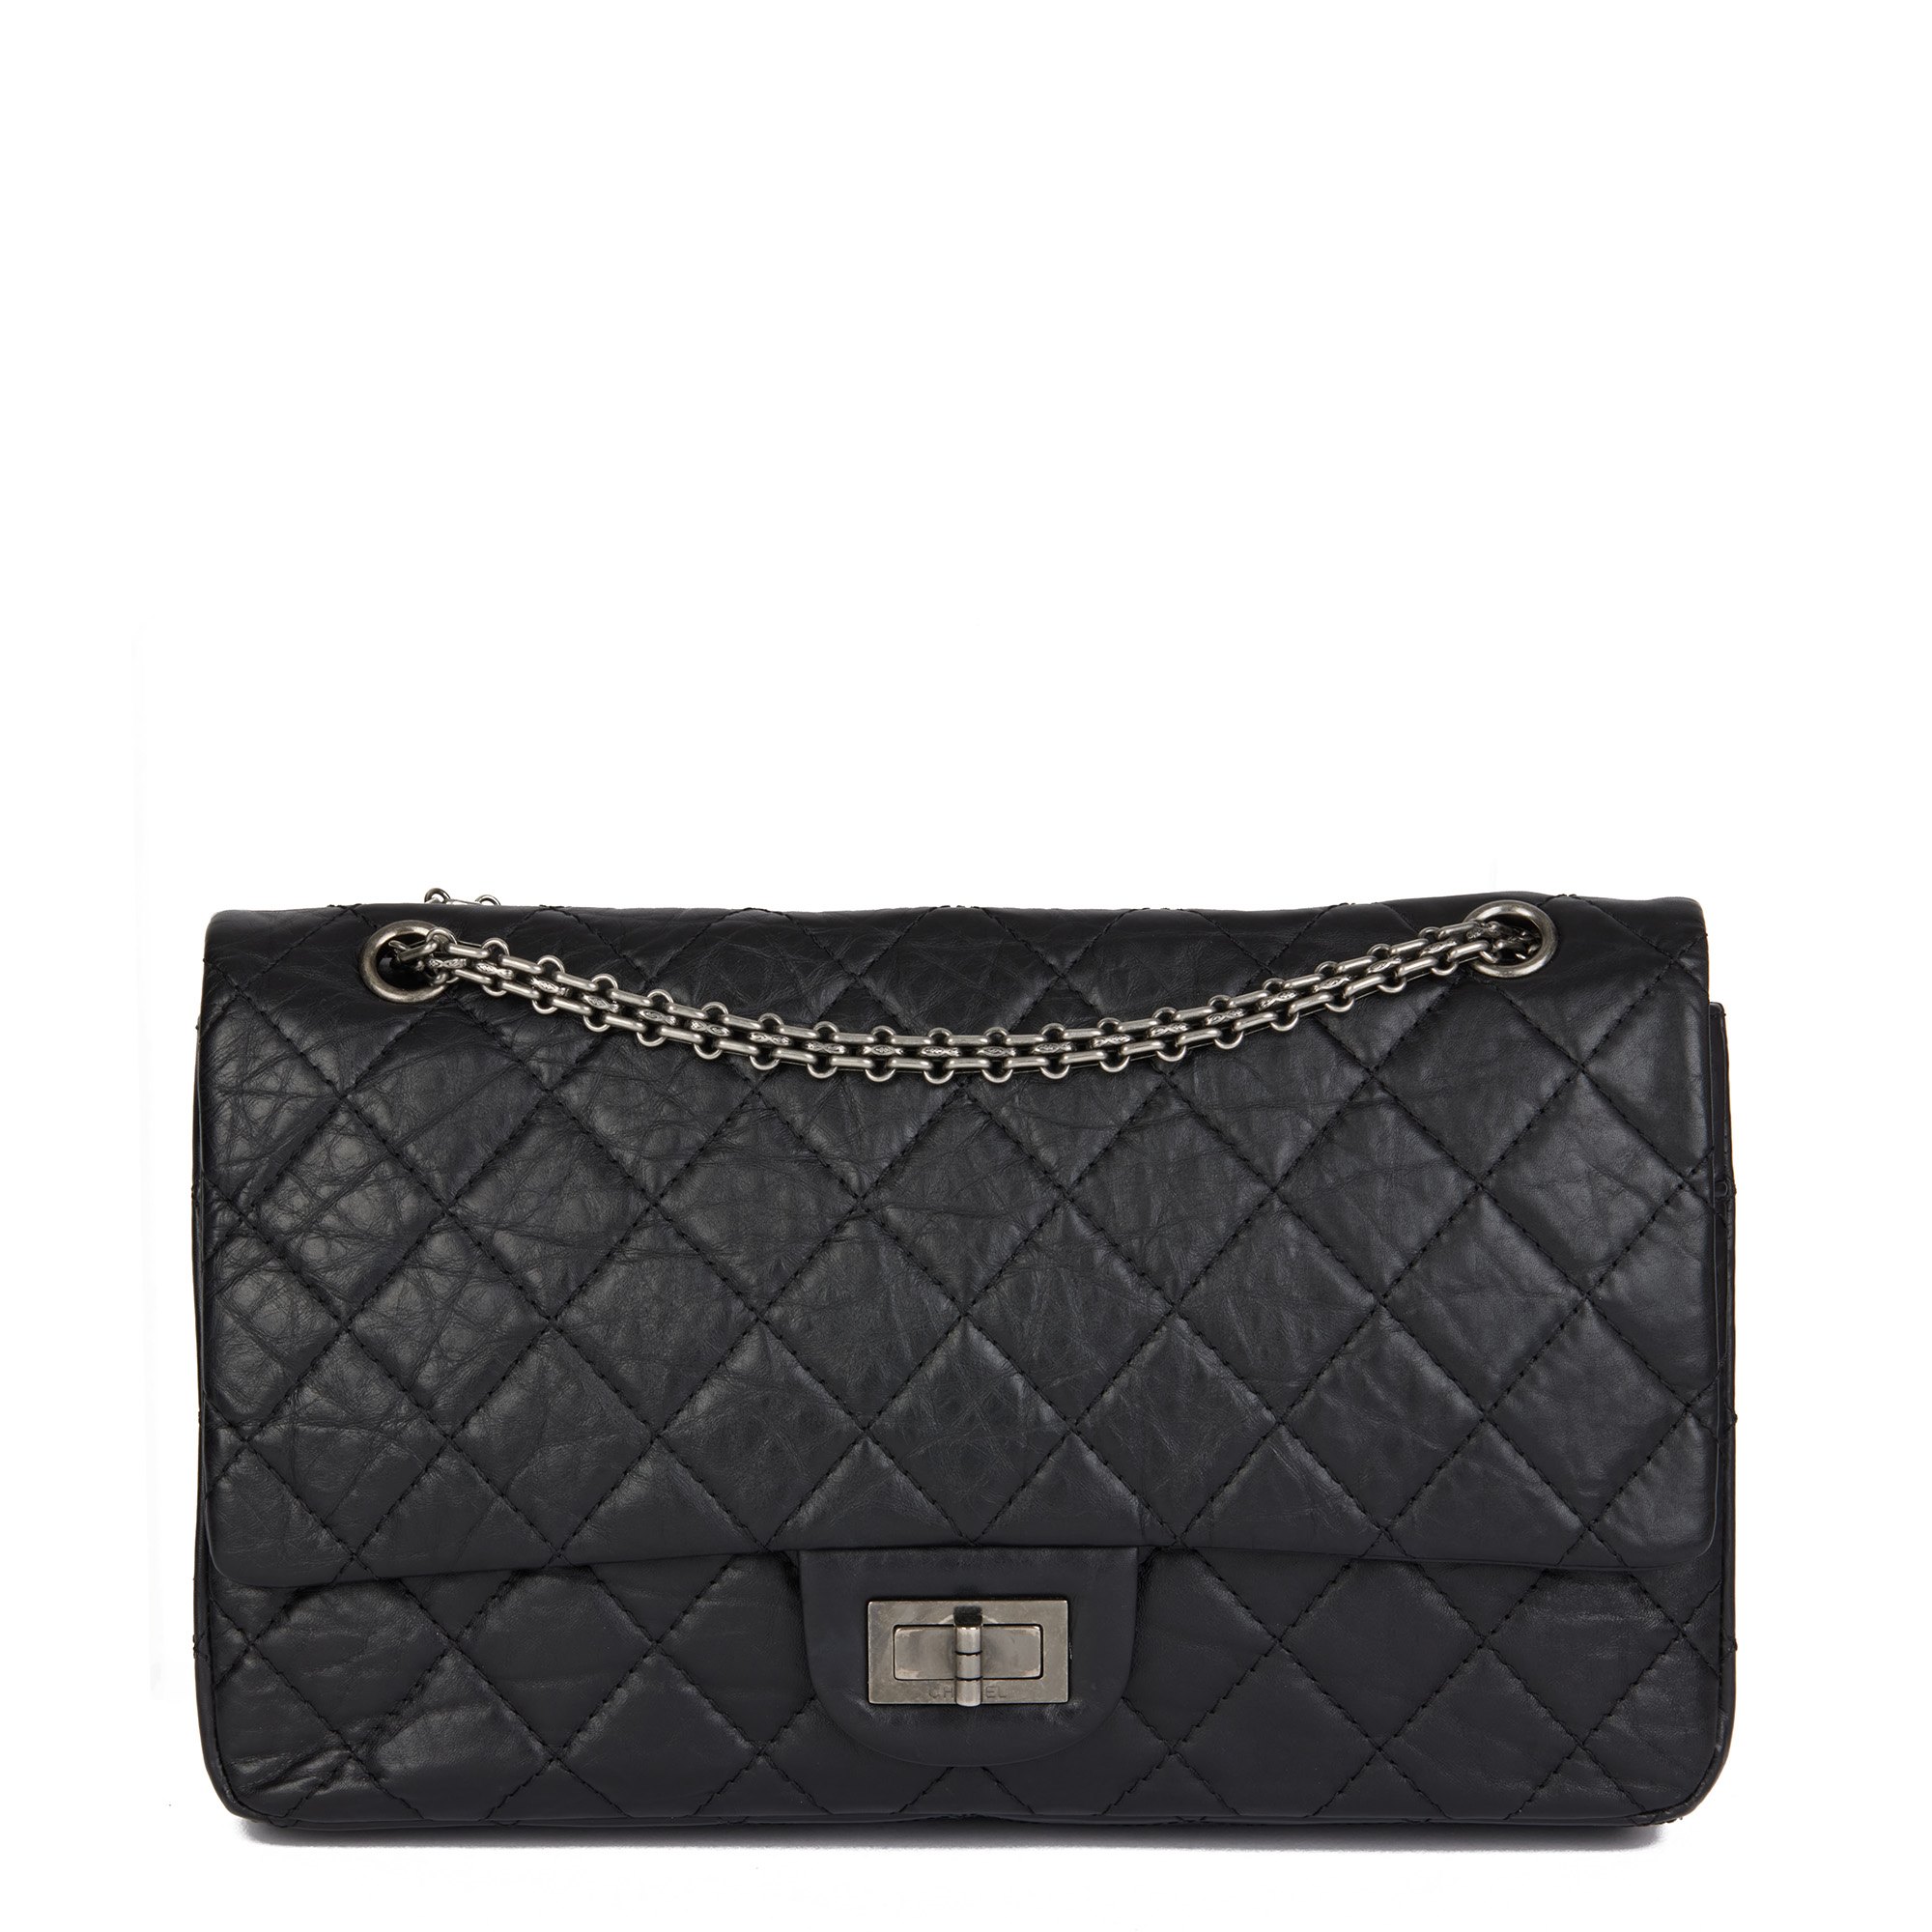 Chanel 2.55 227 Flap Bag 2011 CB608 Handtassen